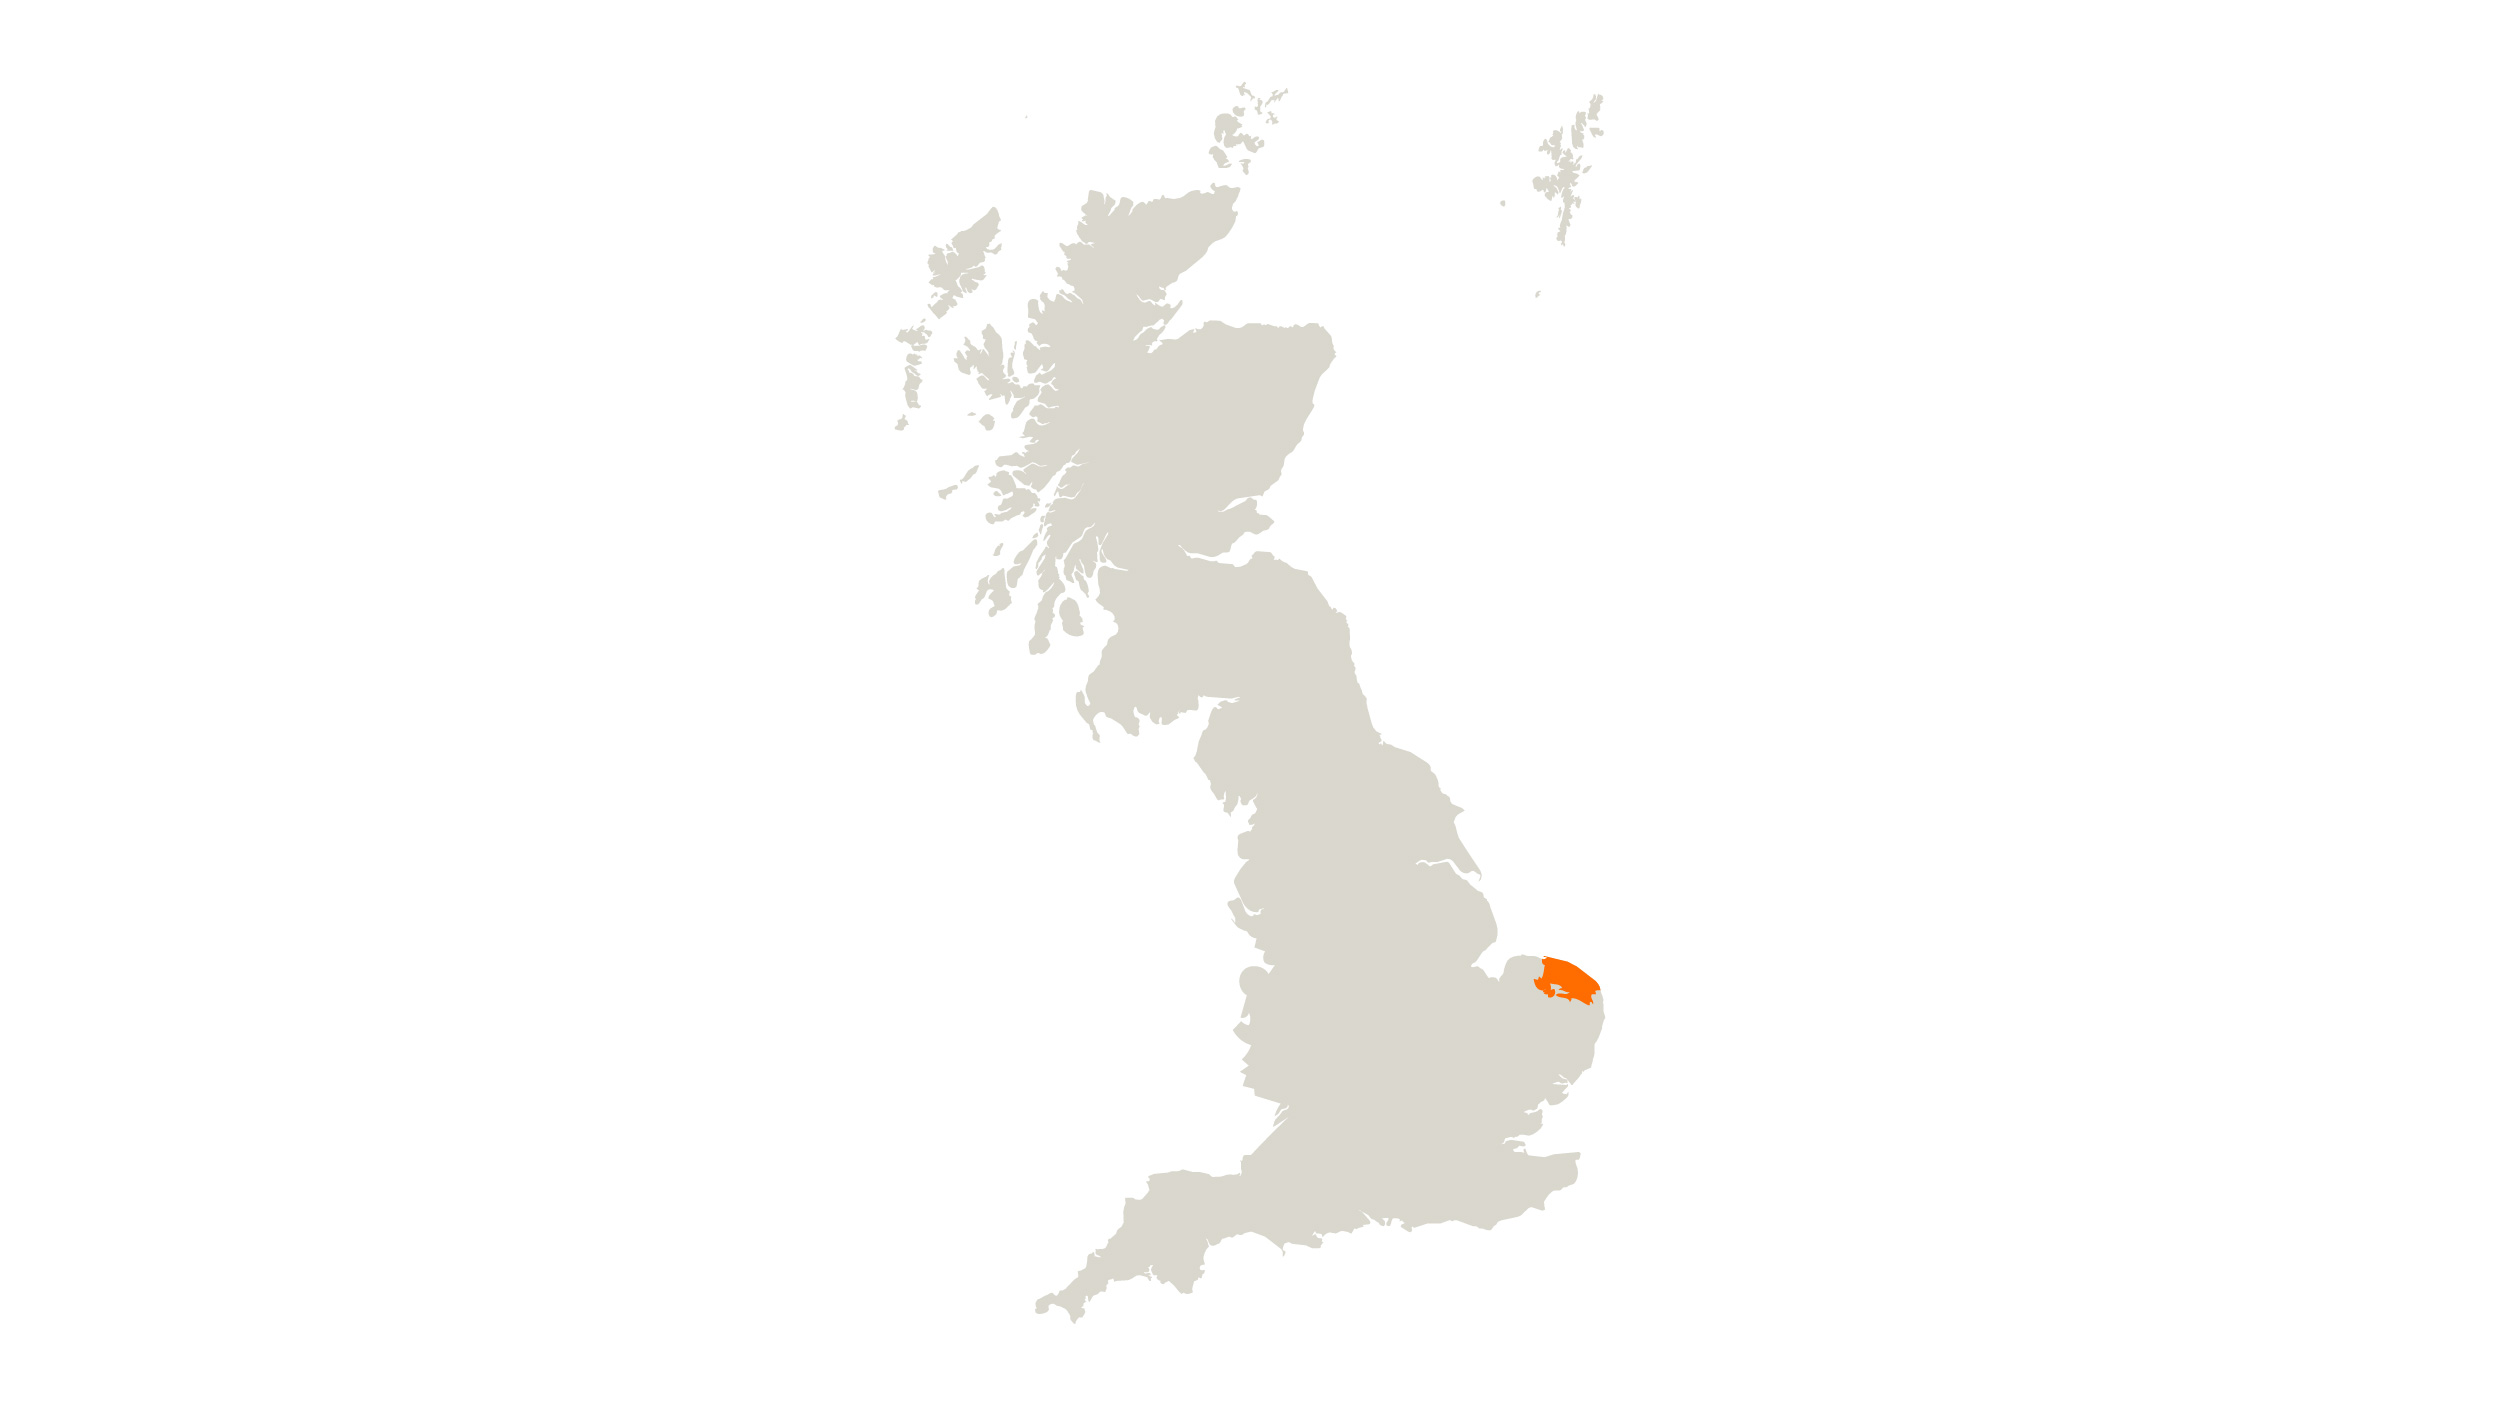 KWS-GB-Consultant-Map-Sugarbeet-Jonathan-Pilbrow.jpg